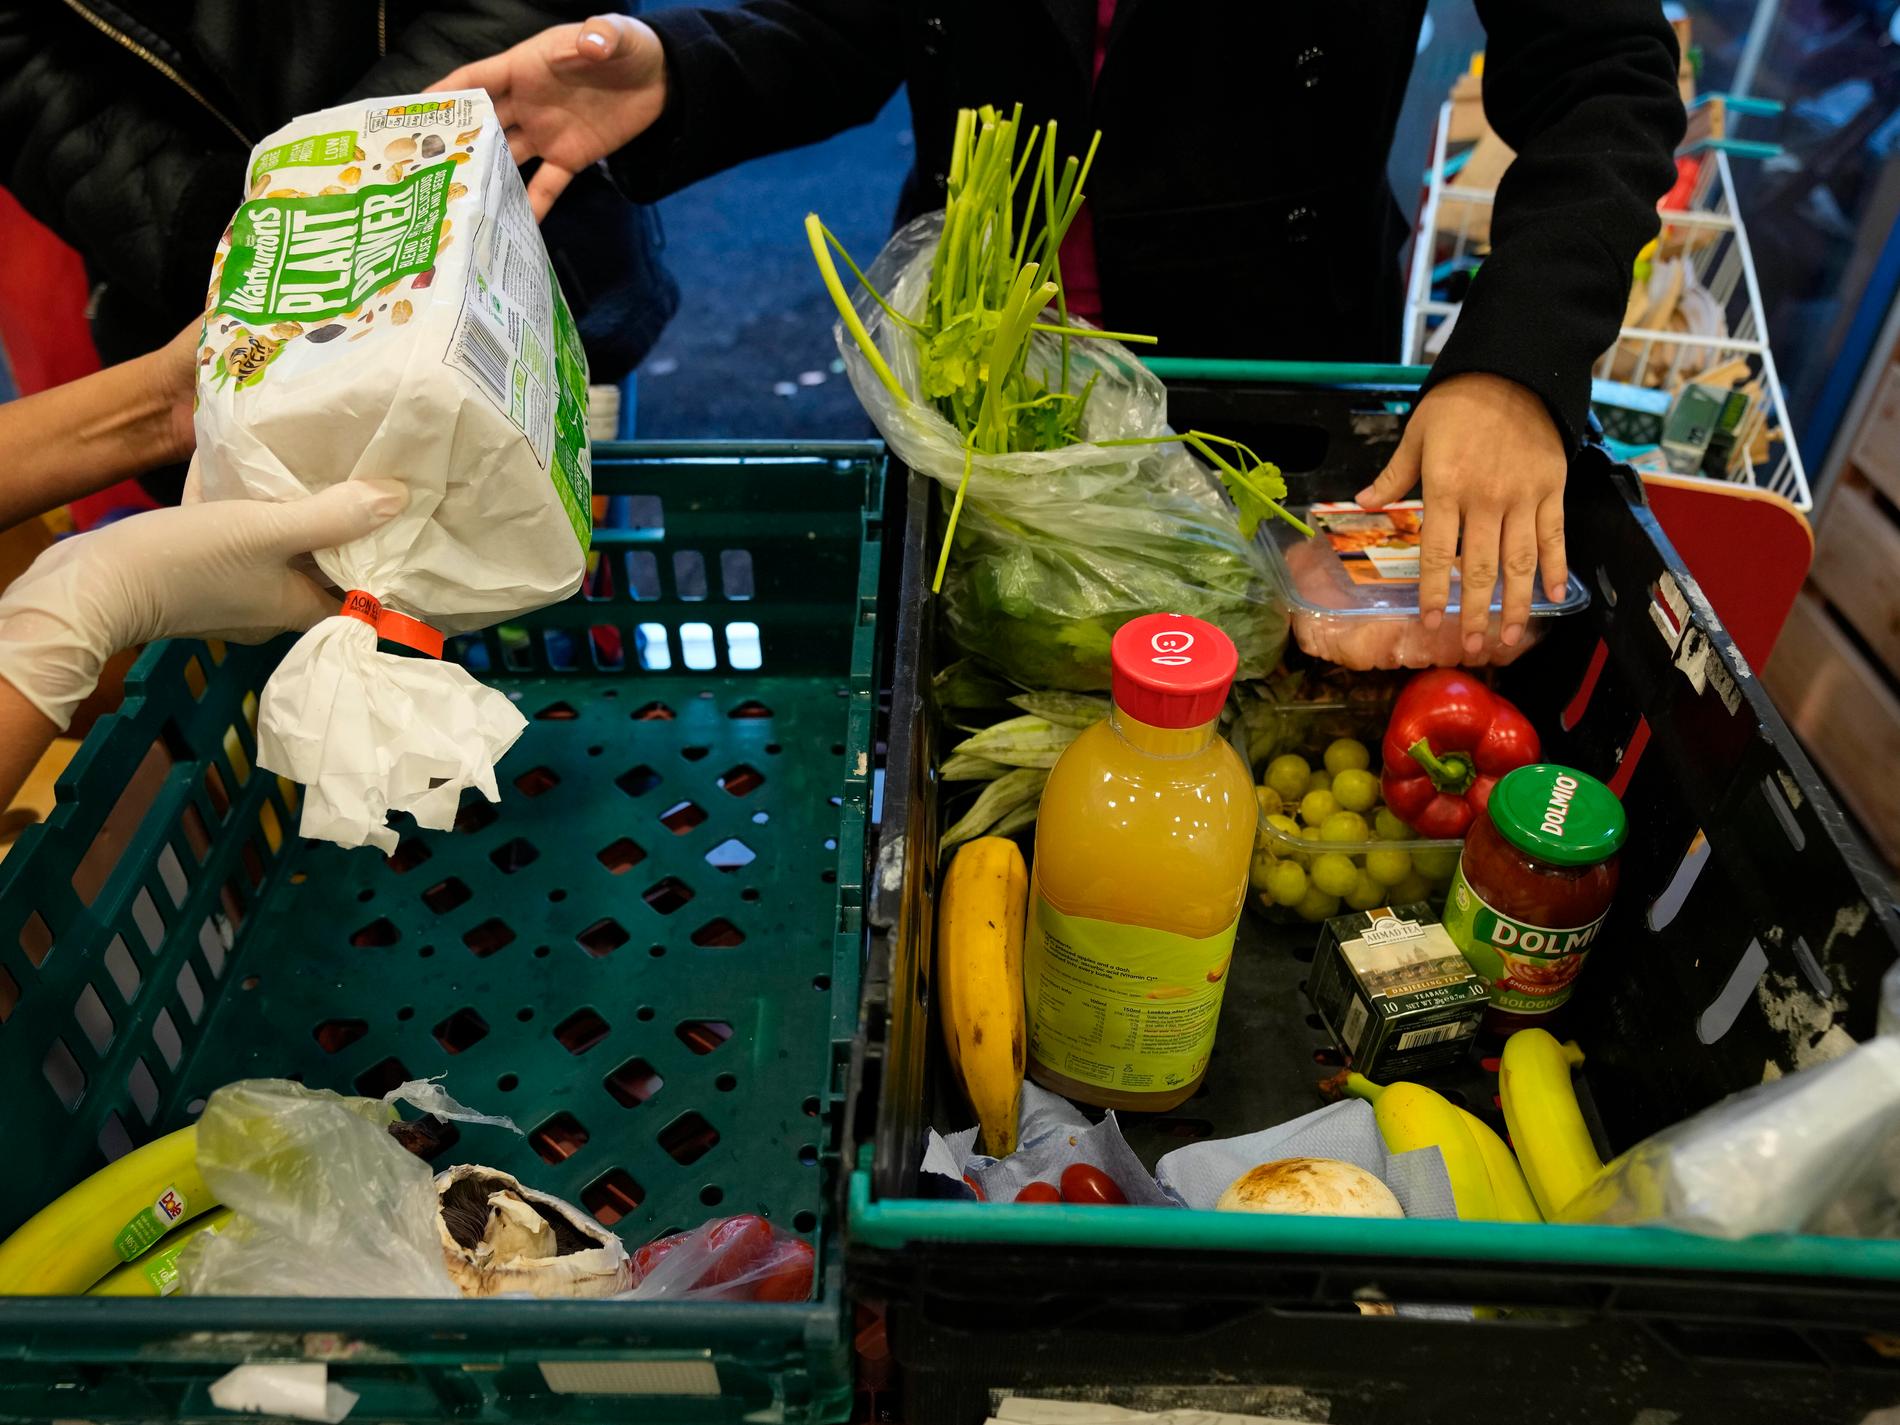 Rekordmånga britter beroende av matbanker